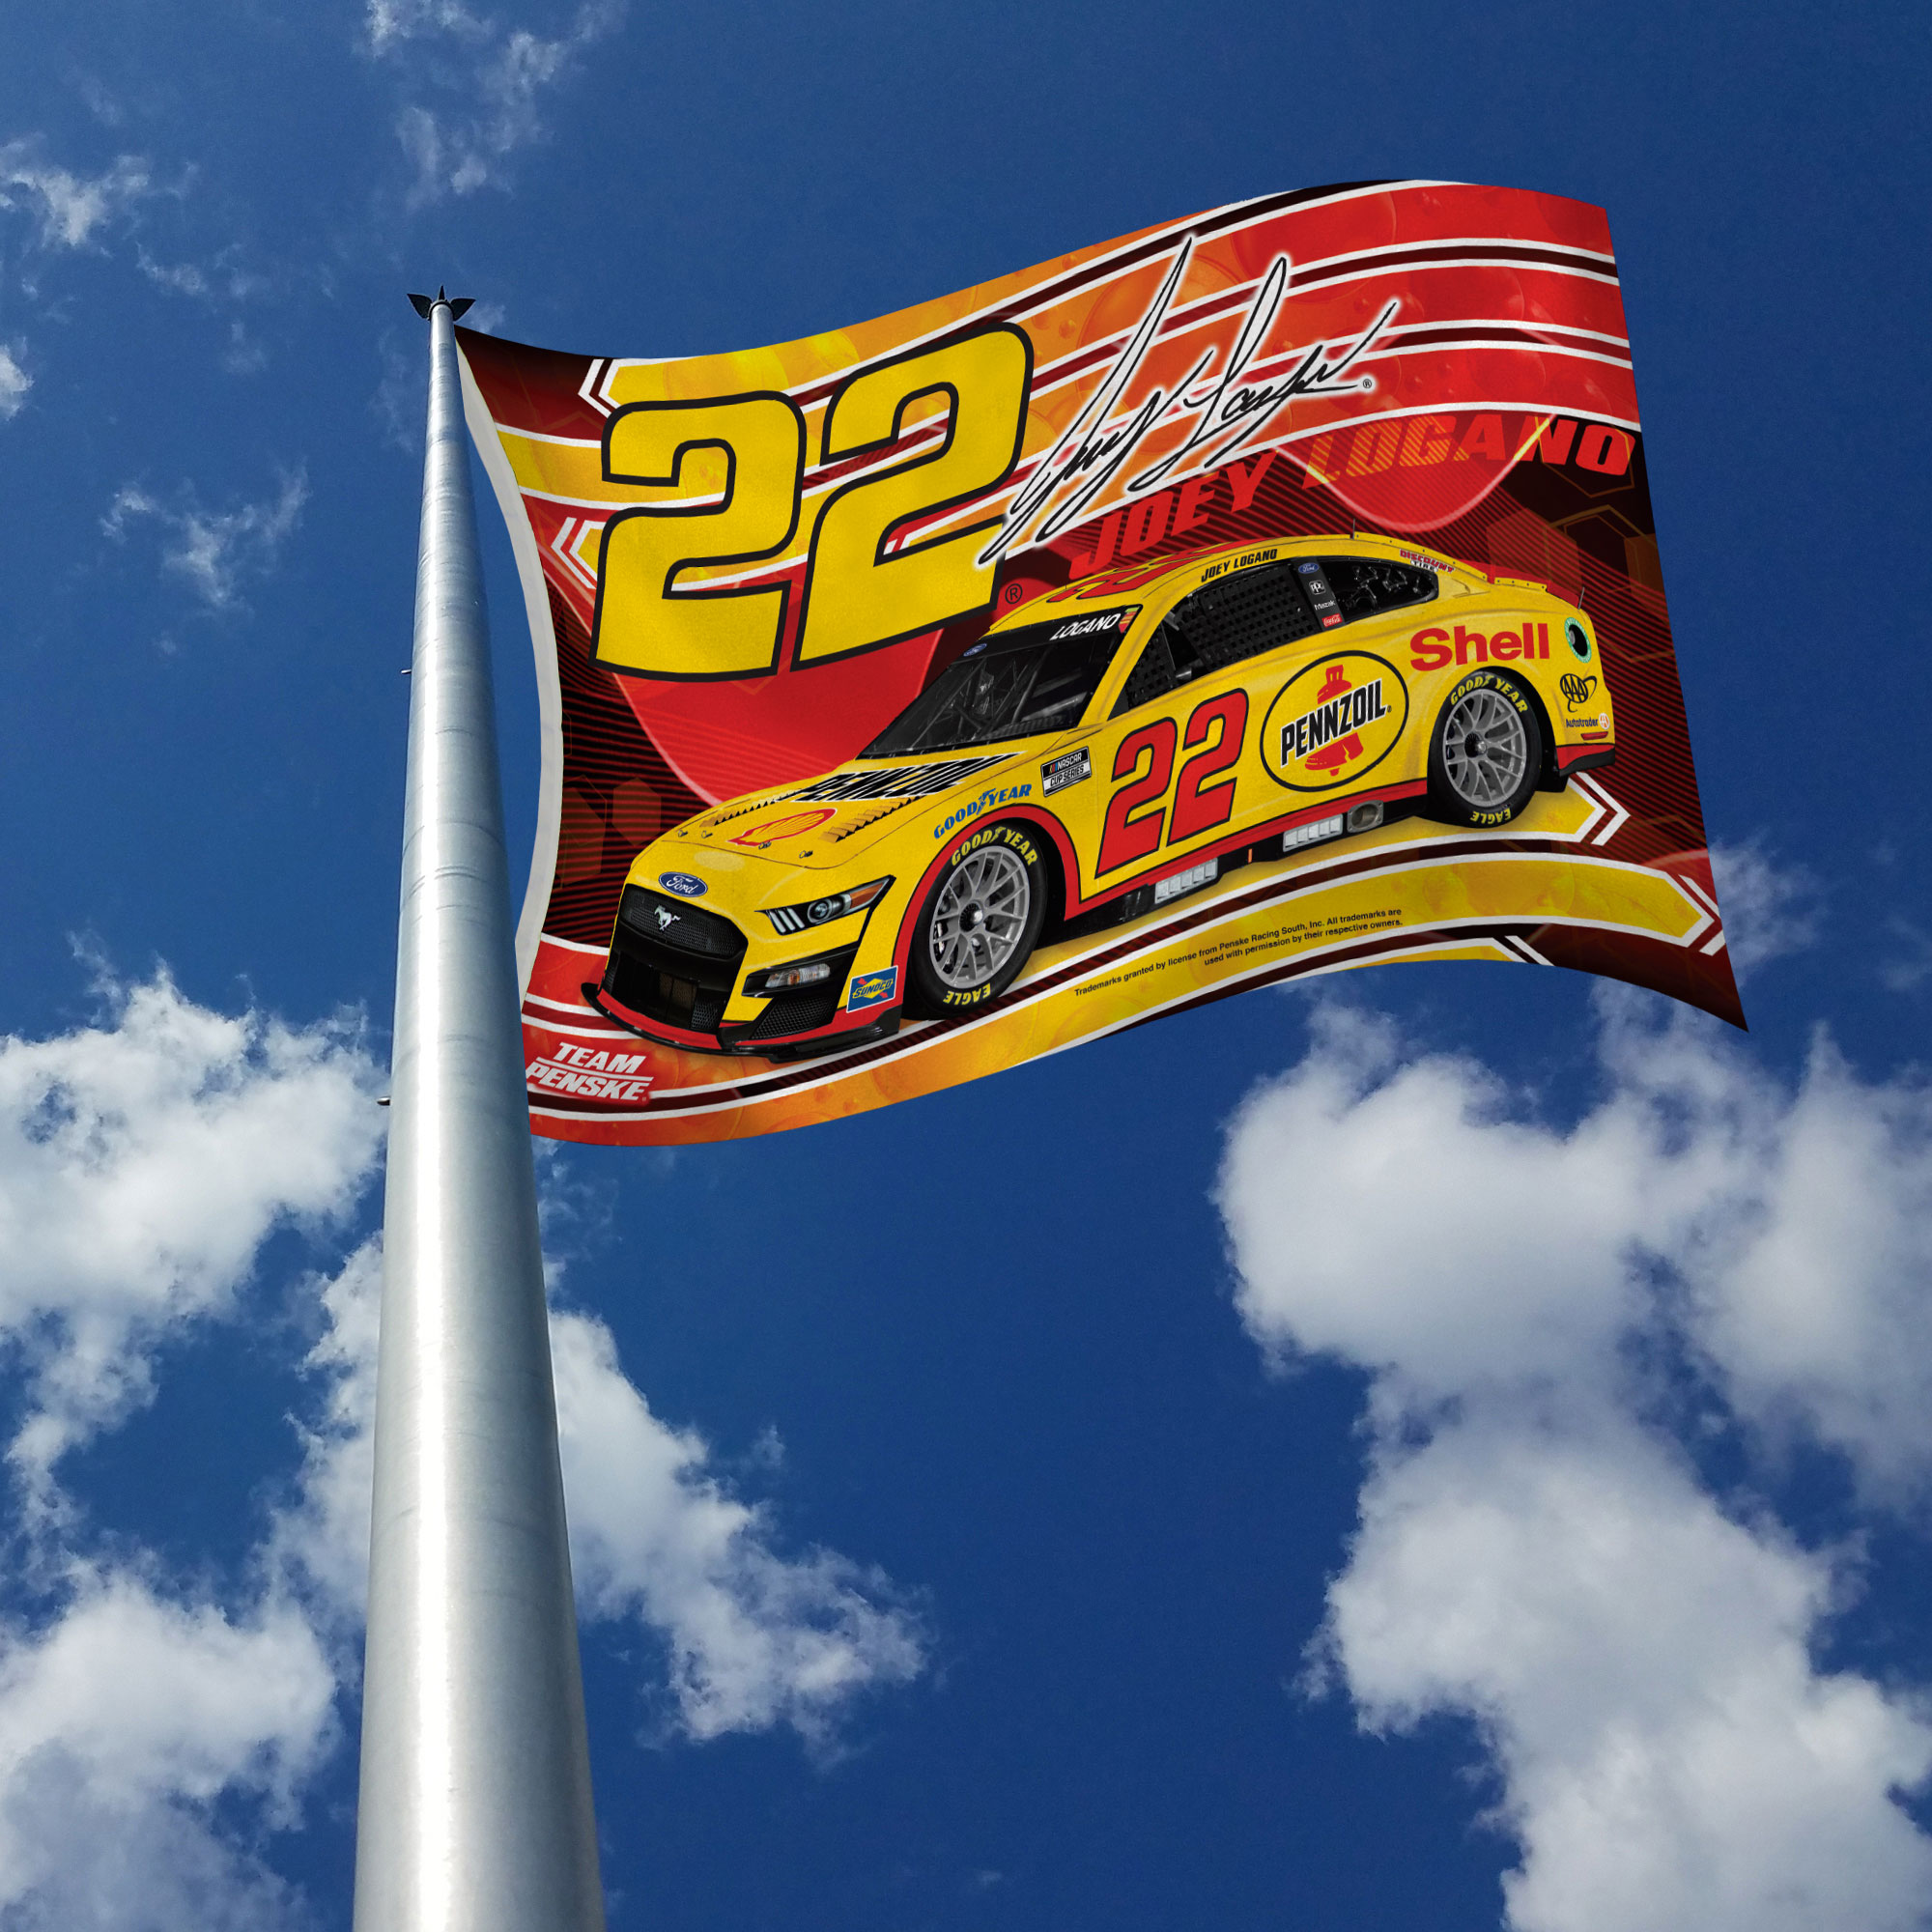 Rico Industries NASCAR Racing Joey Logano Signature 3' x 5' Banner Flag